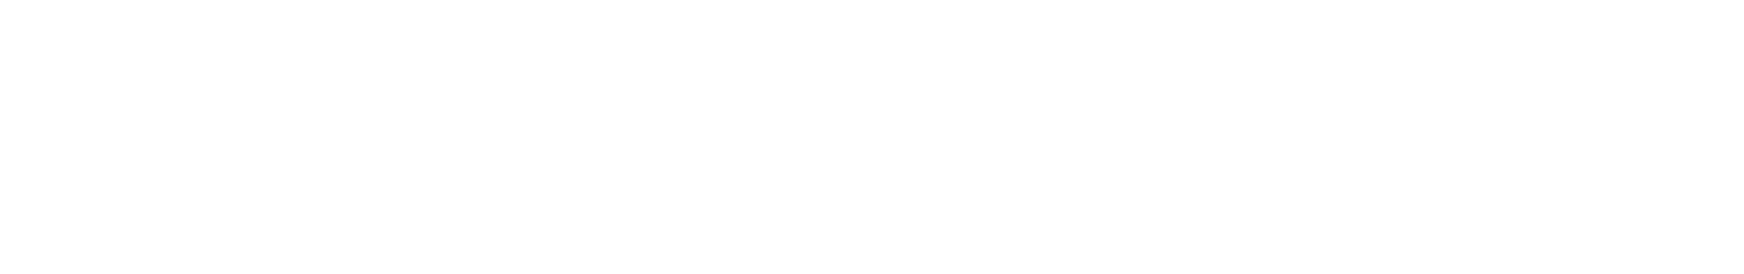 codesecure logo-white